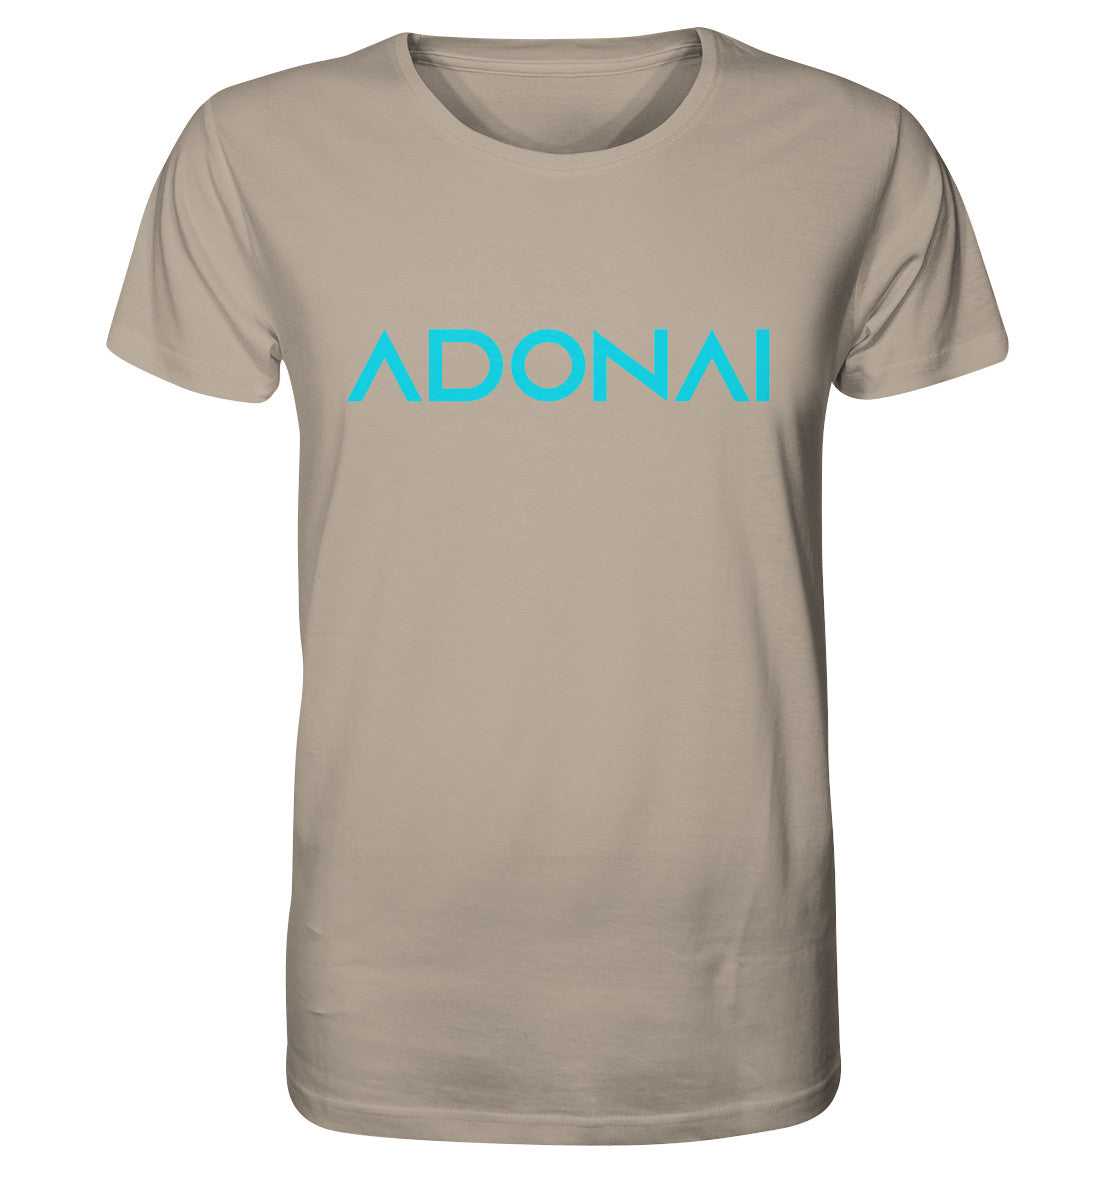 ADONAI - Organic Shirt